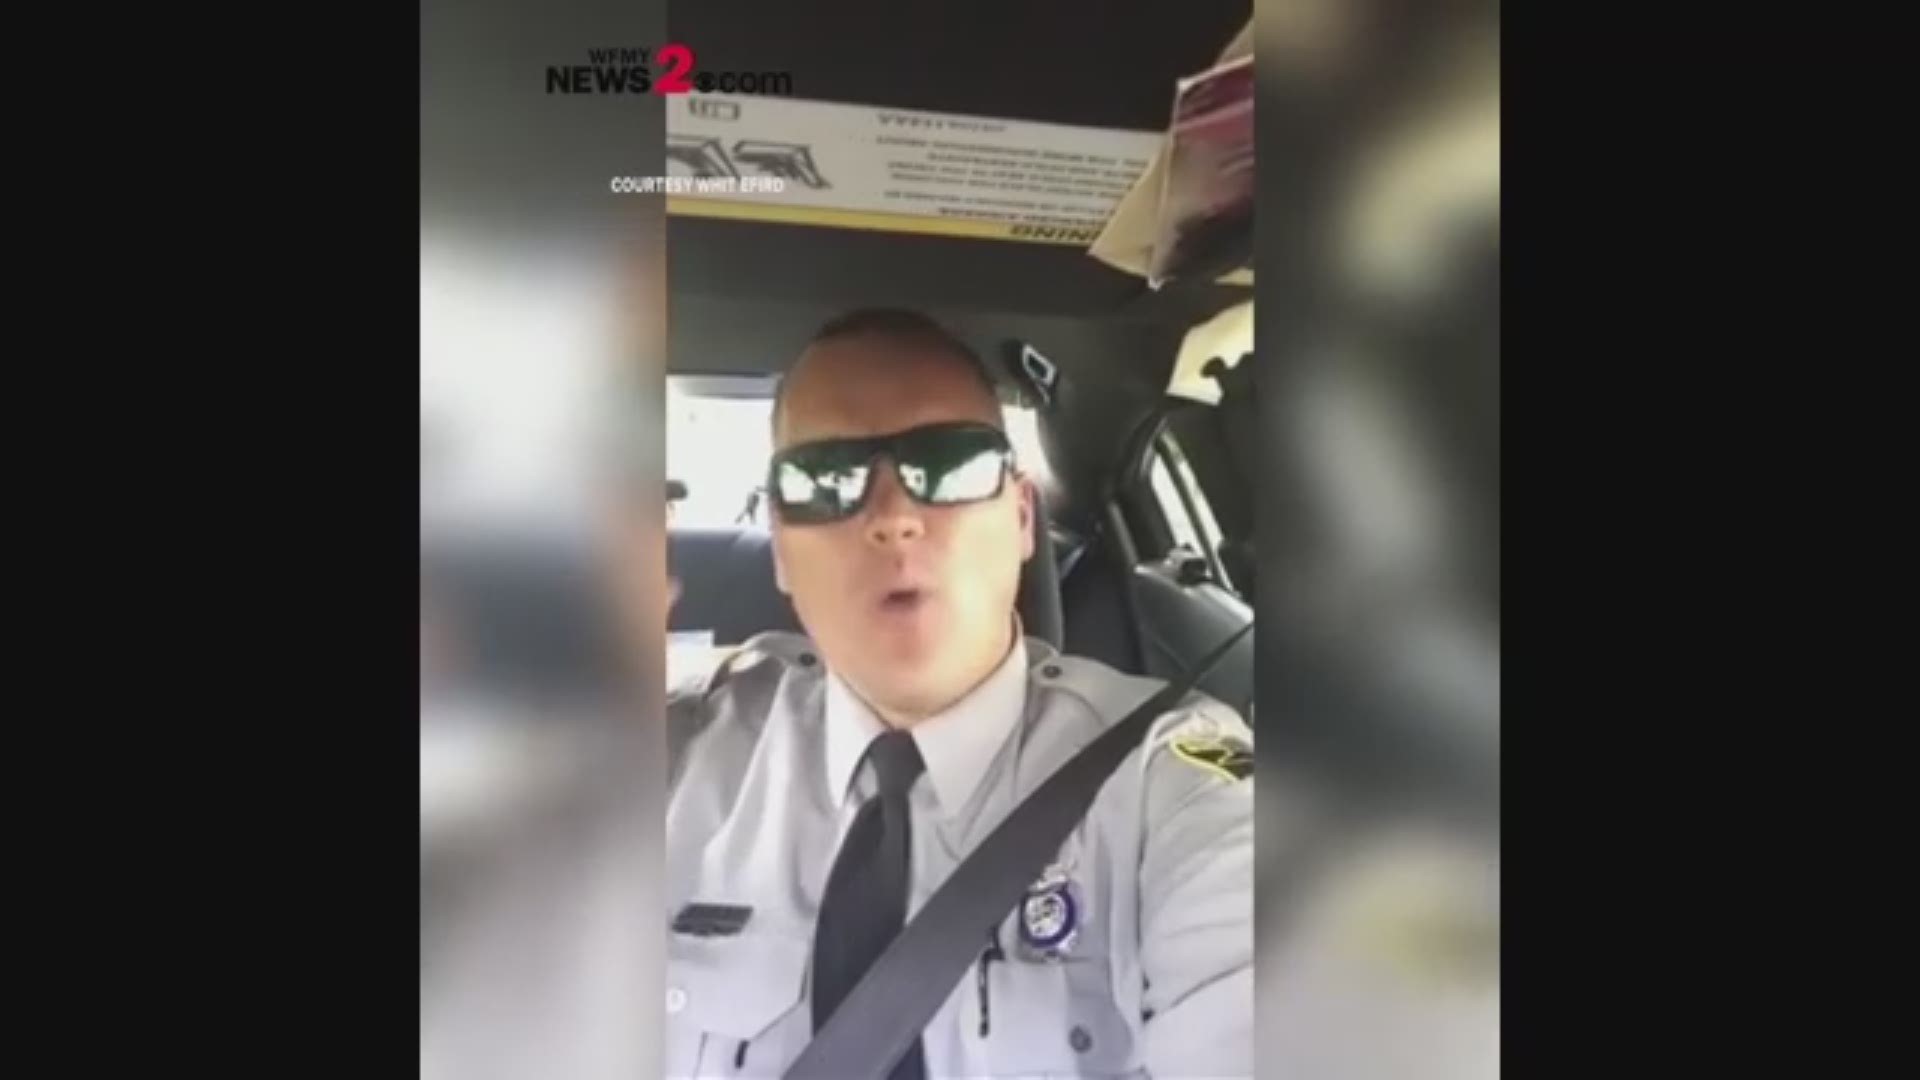 NC Highway Patrolman Joins #LipSyncBattle